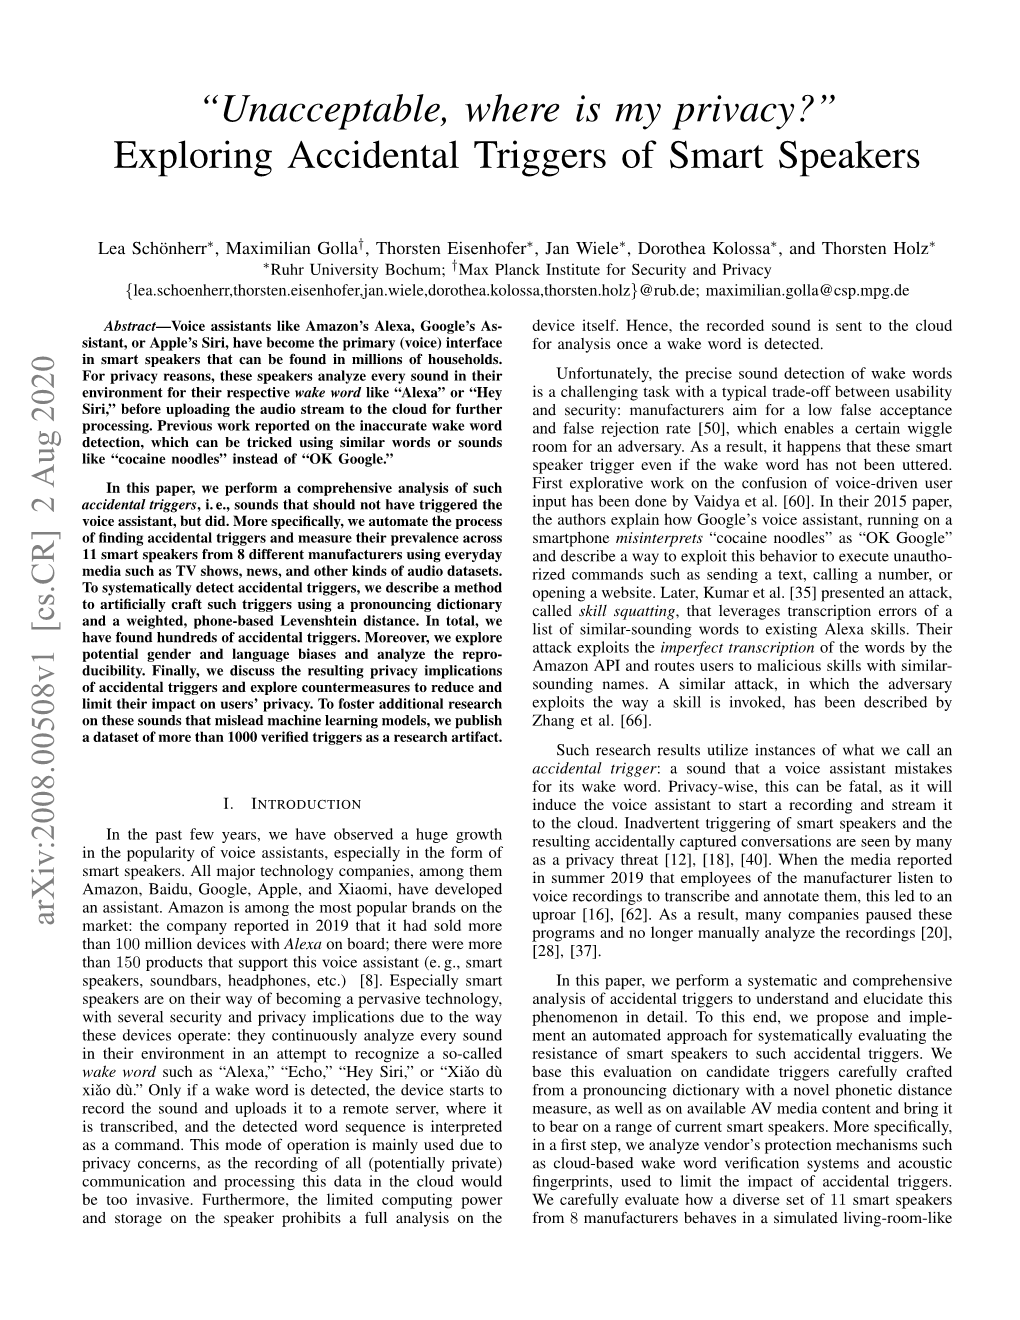 Exploring Accidental Triggers of Smart Speakers